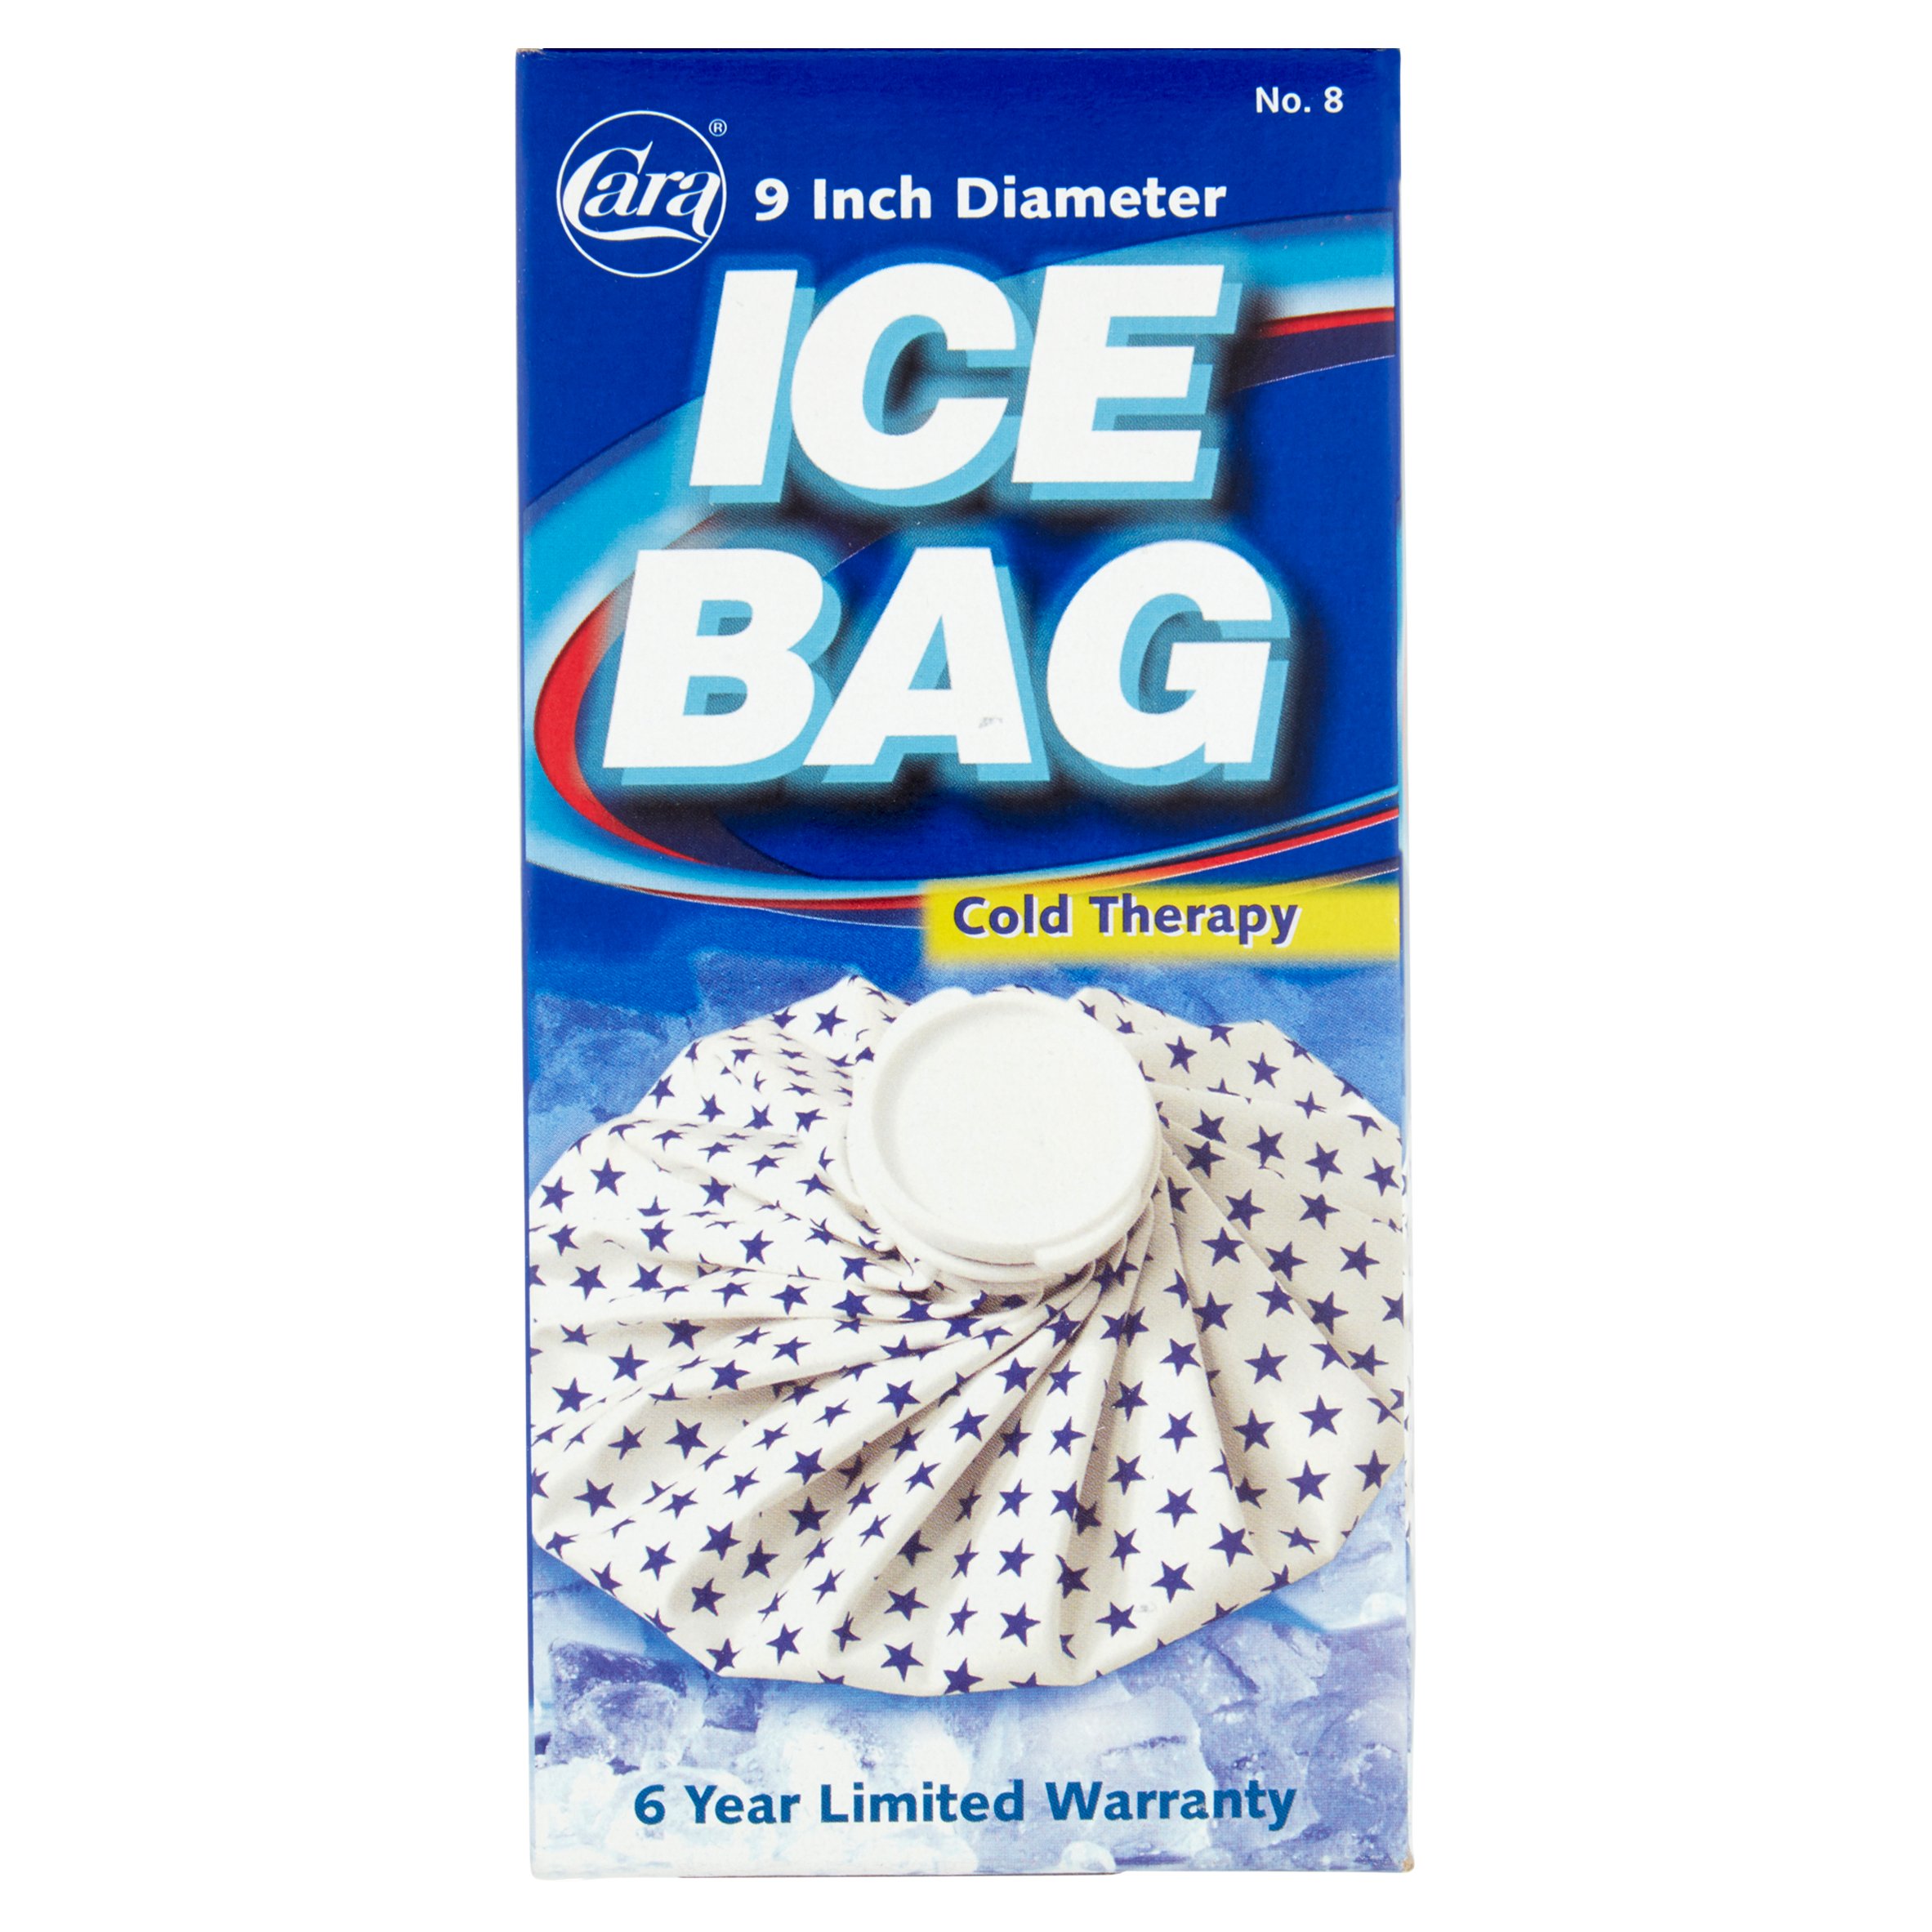 Cara Cold Therapy 9 Inch Ice bag - Walmart.com